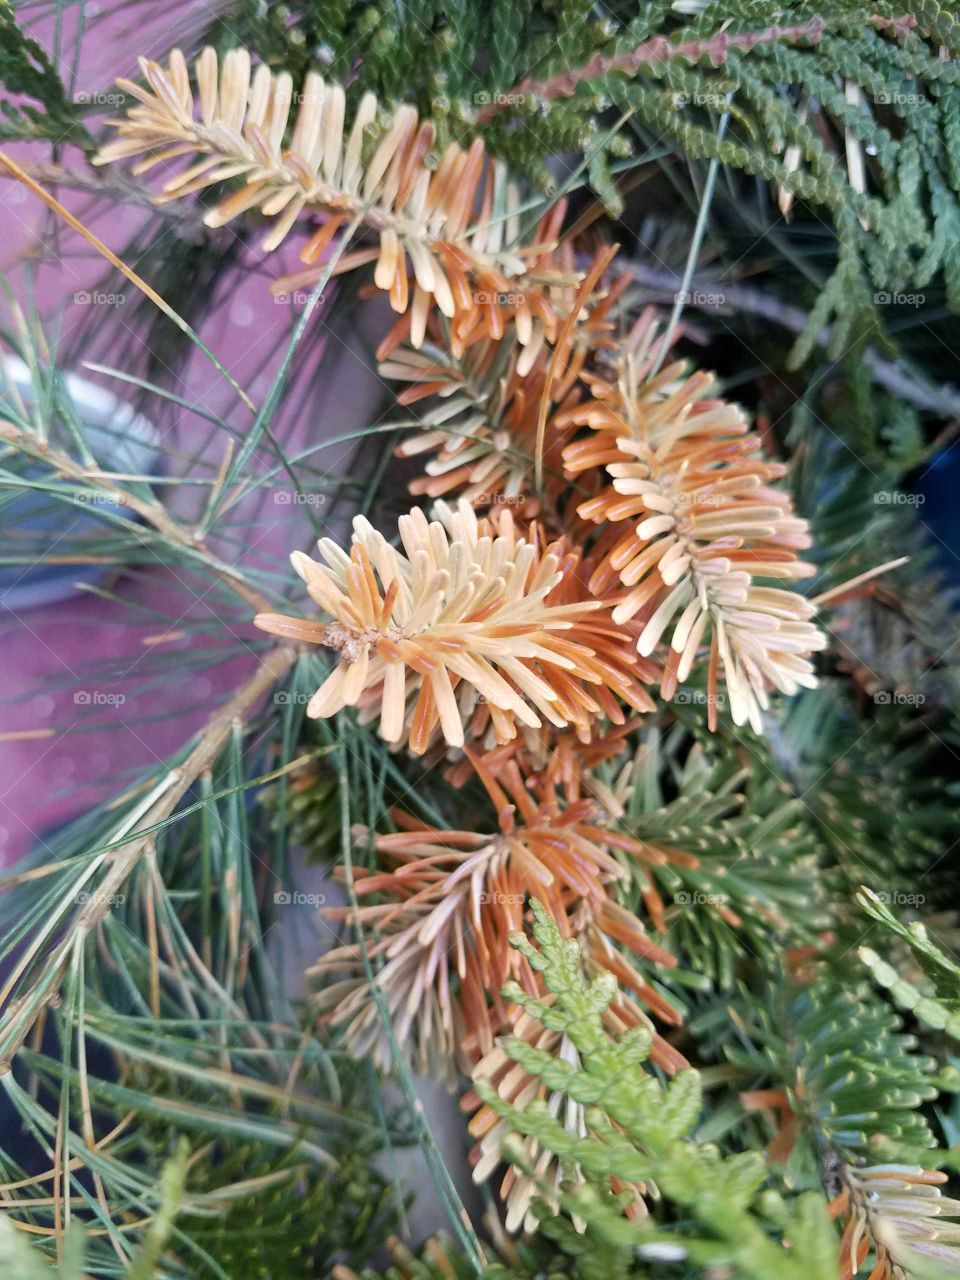 Pine needles turning